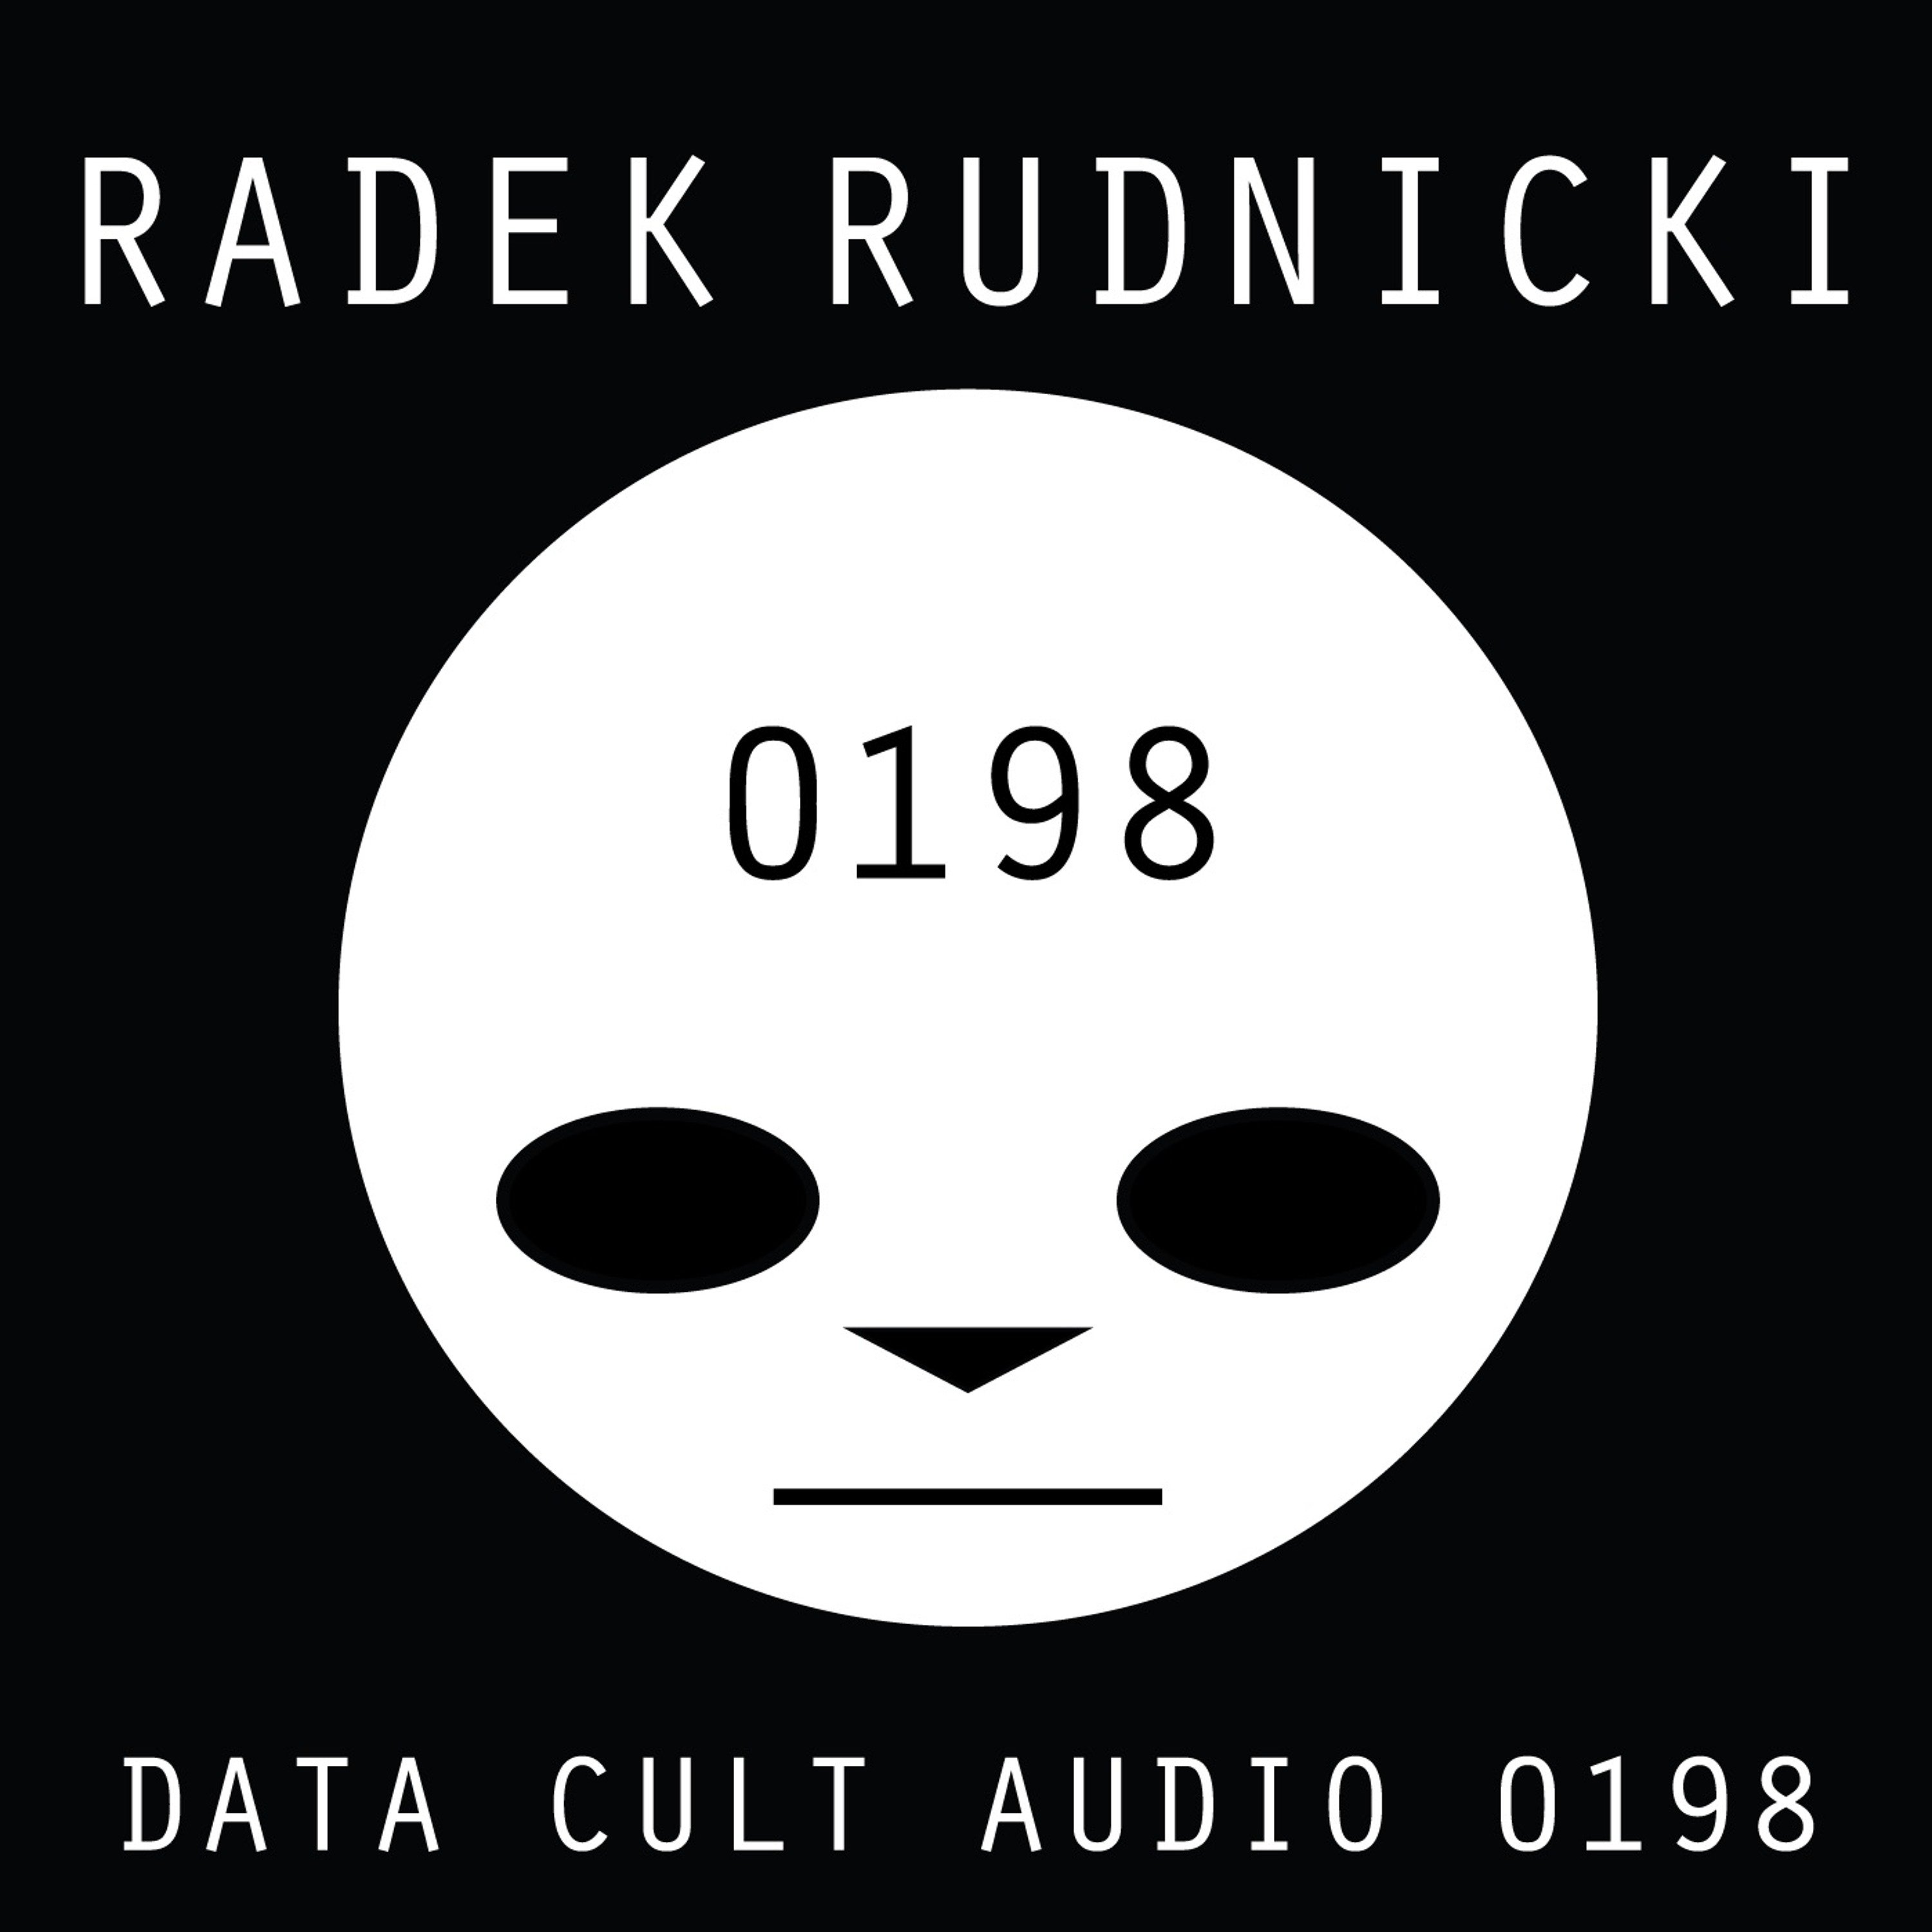 Data Cult Audio 0198 - Radek Rudnicki